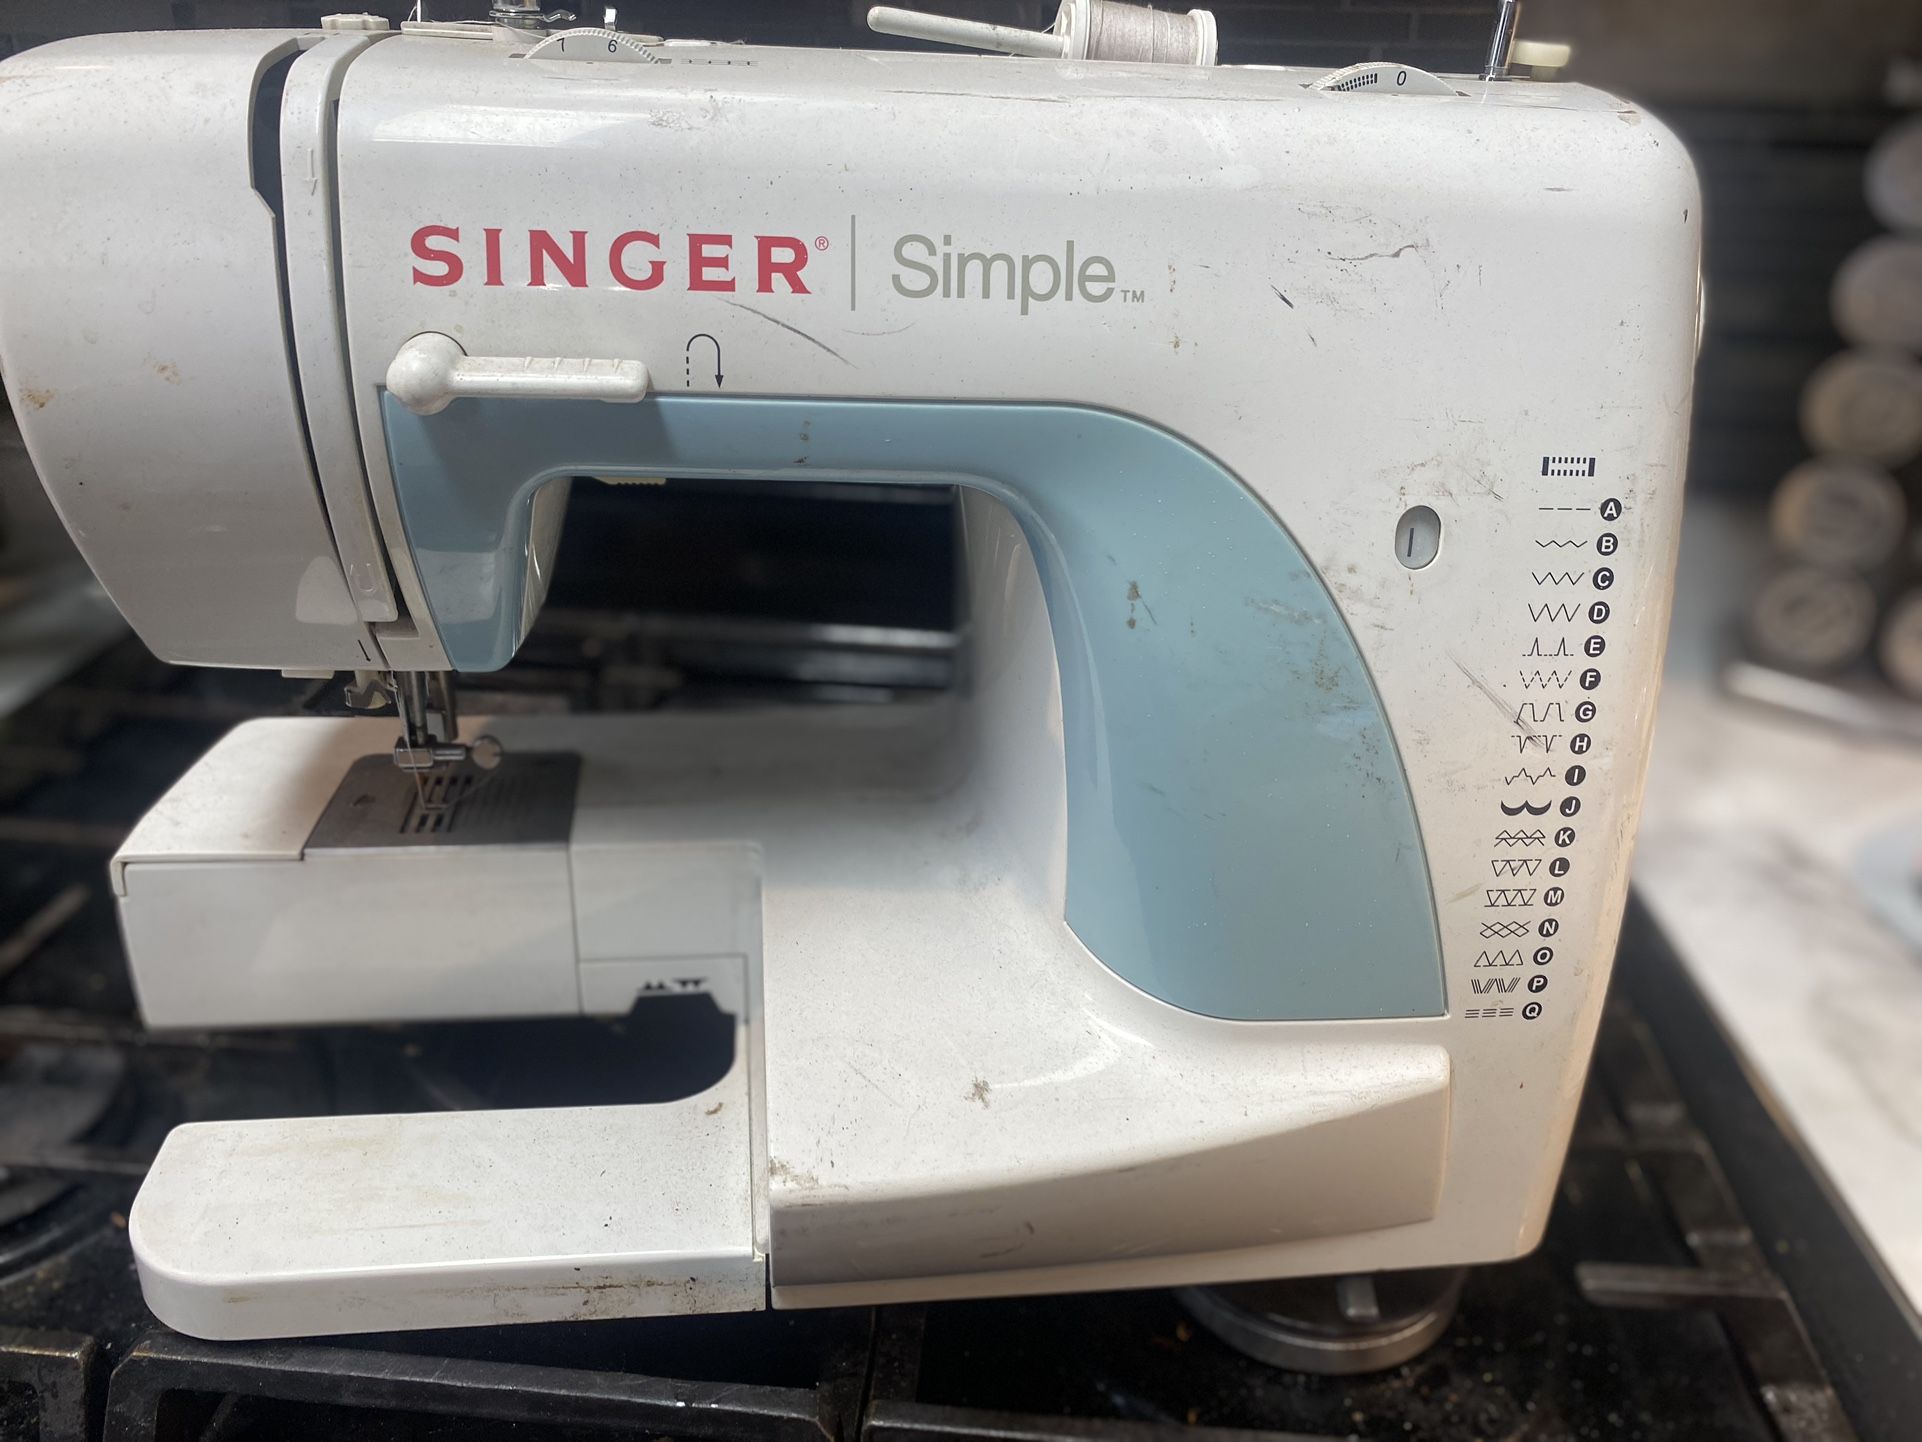 Singer, Simple, Sewing Machine